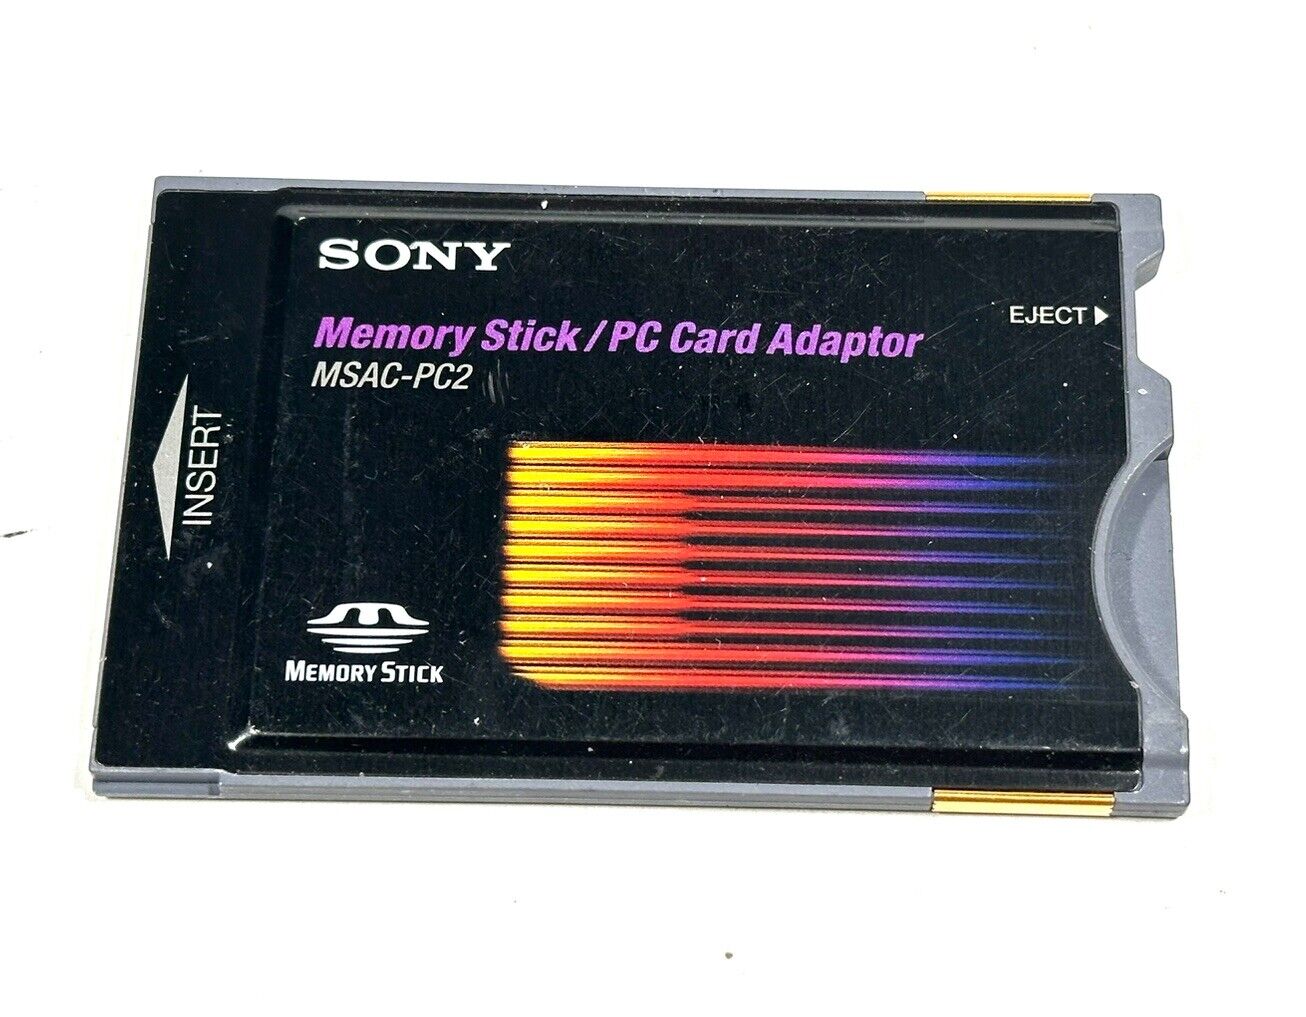 Sony MSAC-PC2 Memory Stick / PC Card Adaptor for Memory Stick  PCMCIA